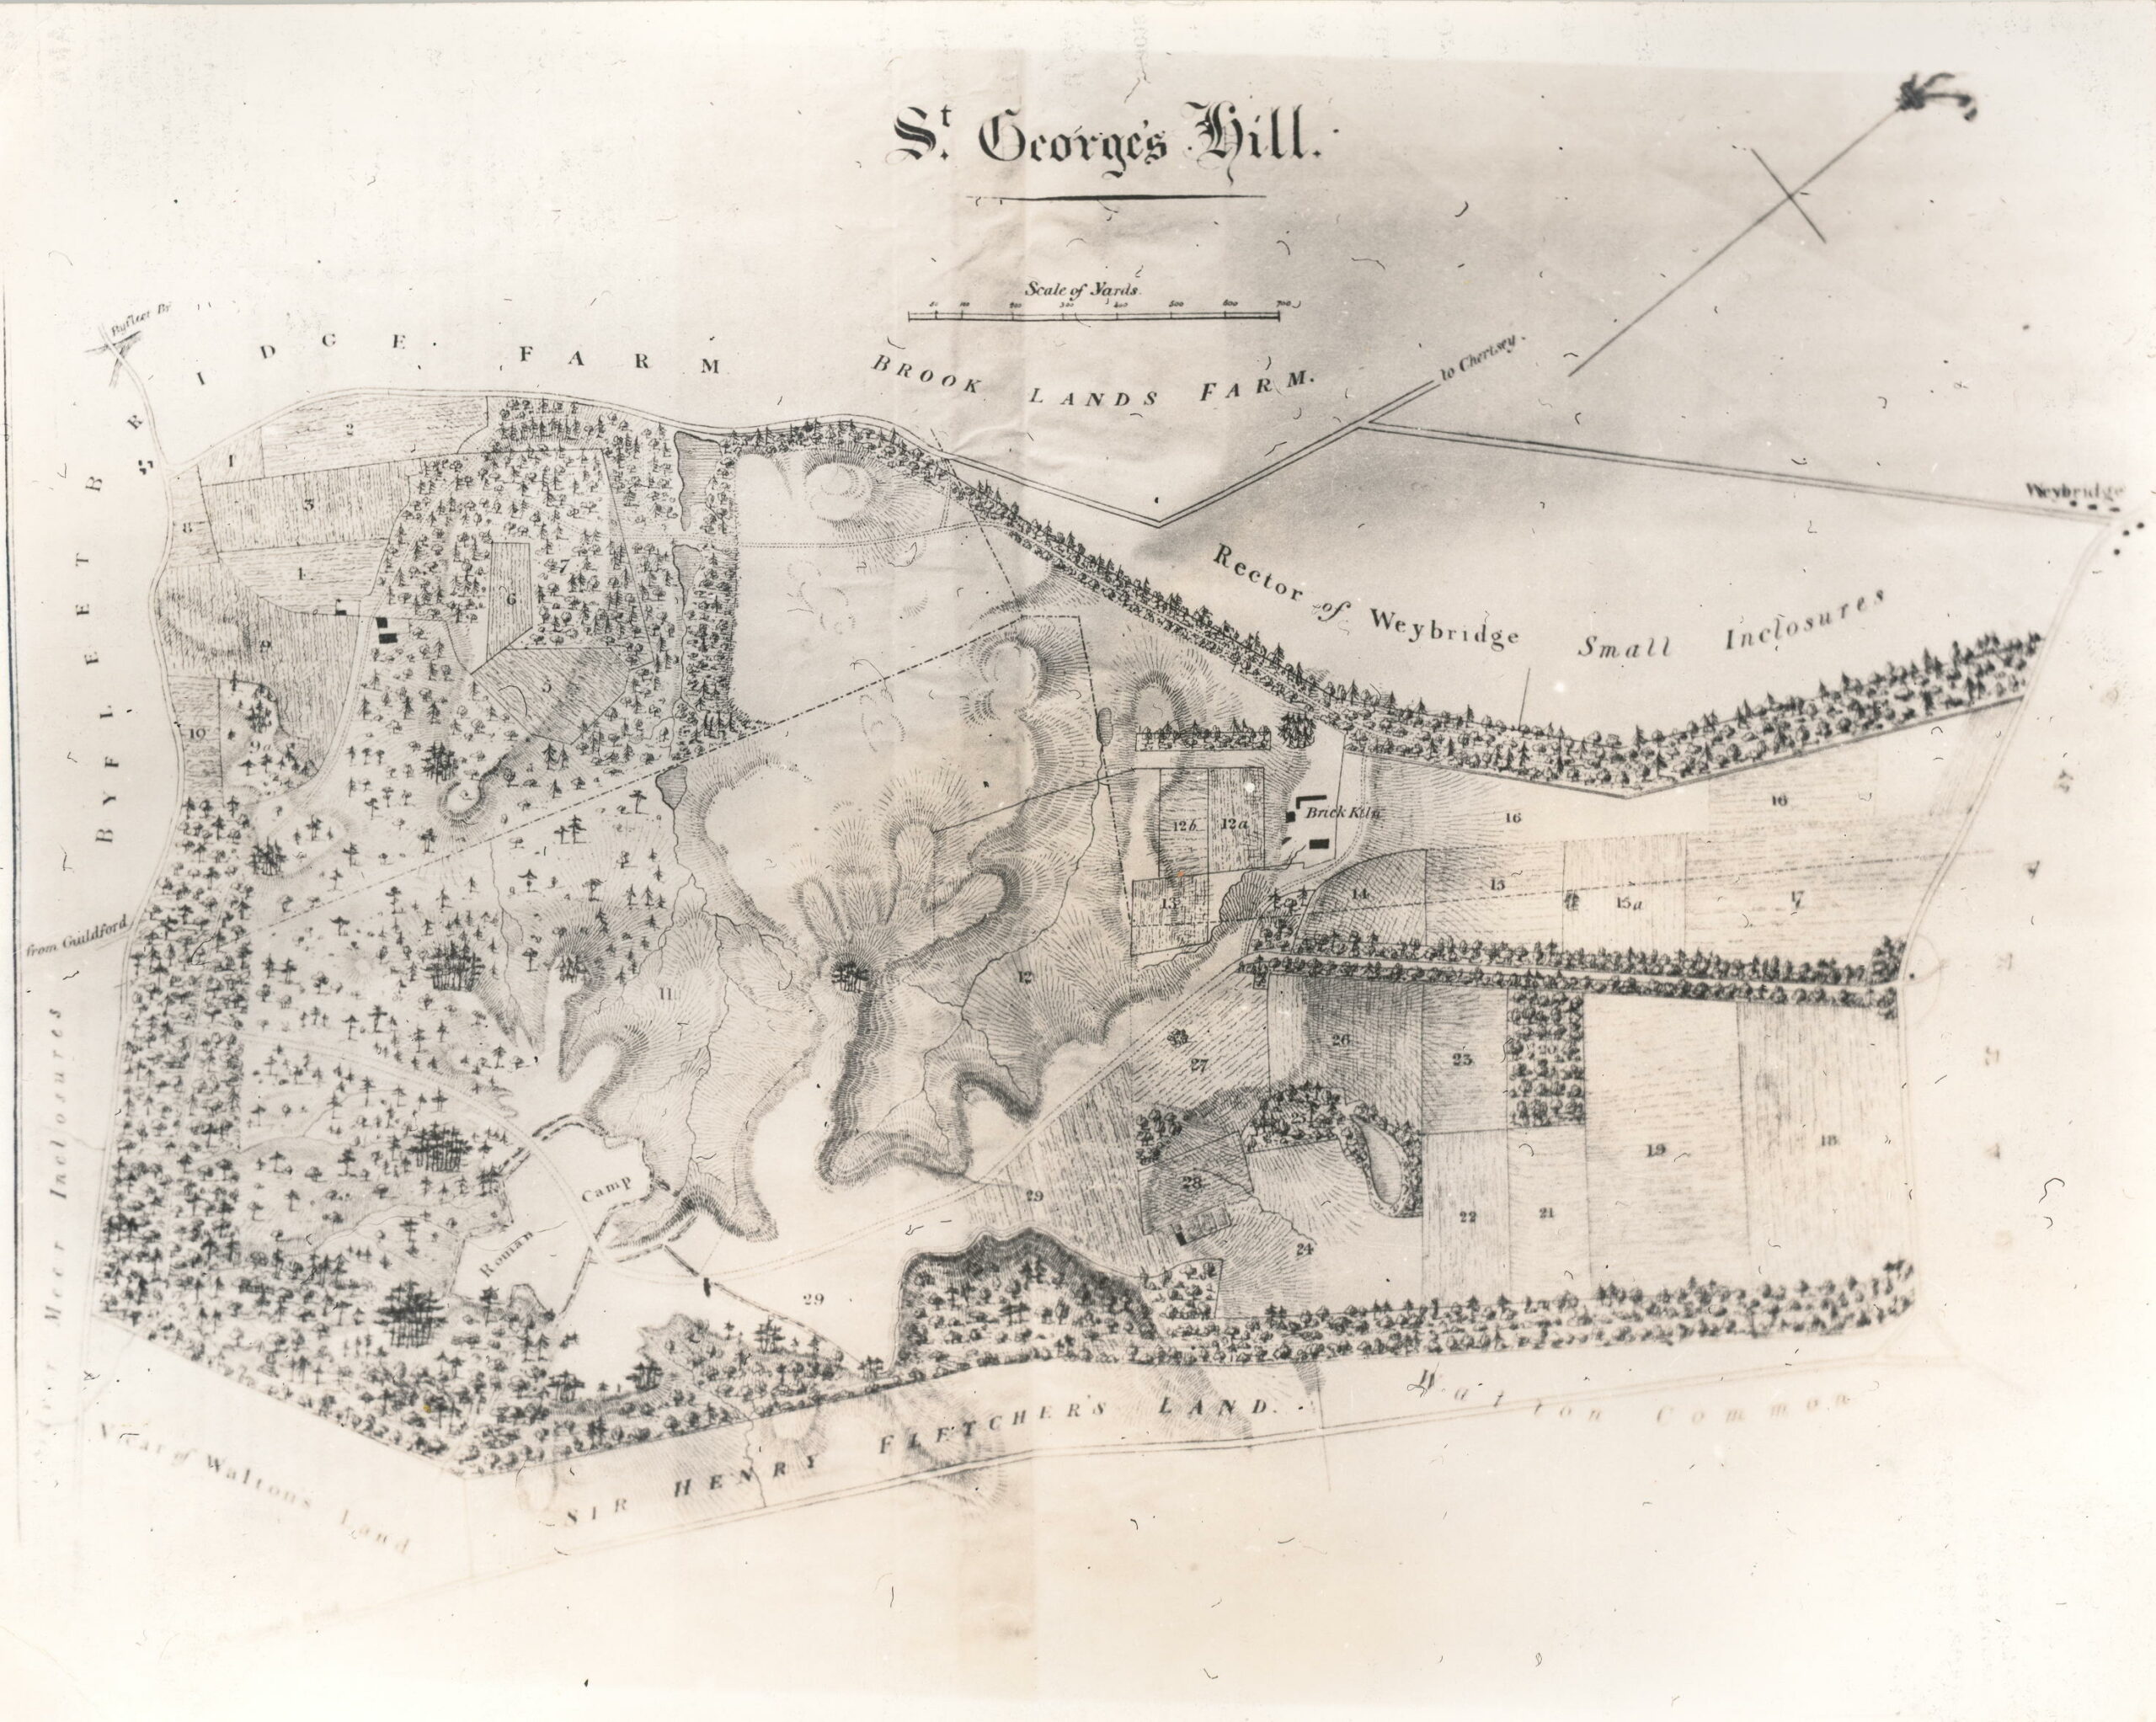 A map of St. George's Hill, Weybridge, before development, c.1830s-40s.